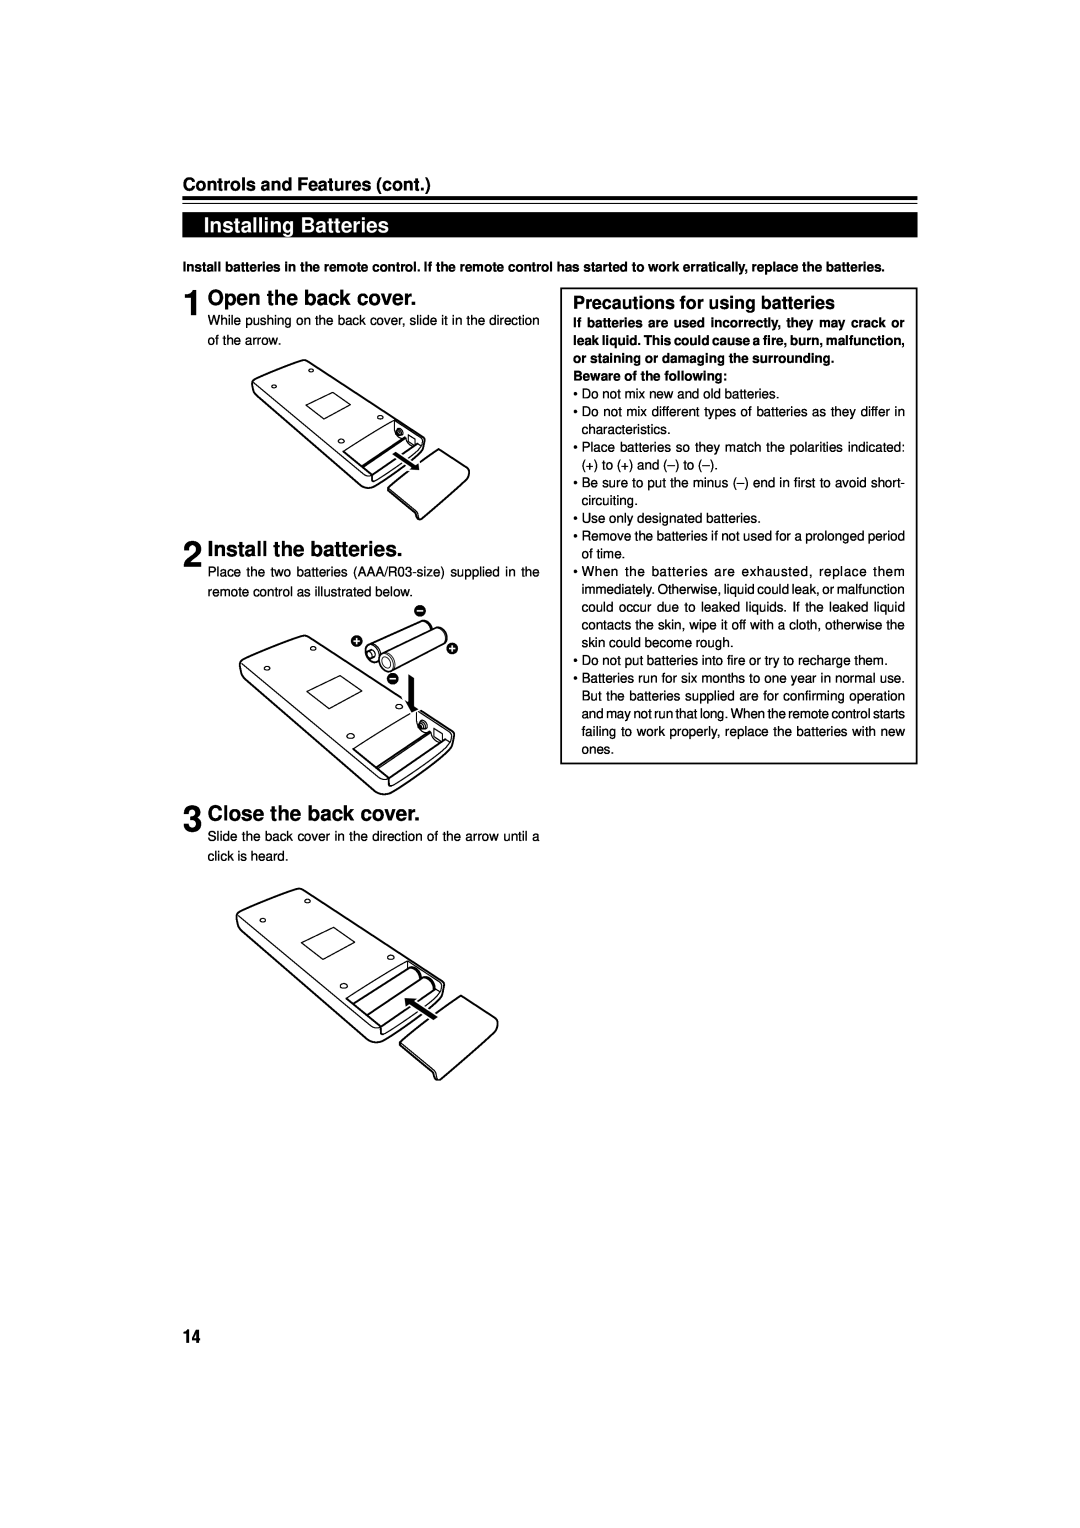 JVC DLA-M15U manual Installing Batteries, Open the back cover, Install the batteries, Close the back cover 